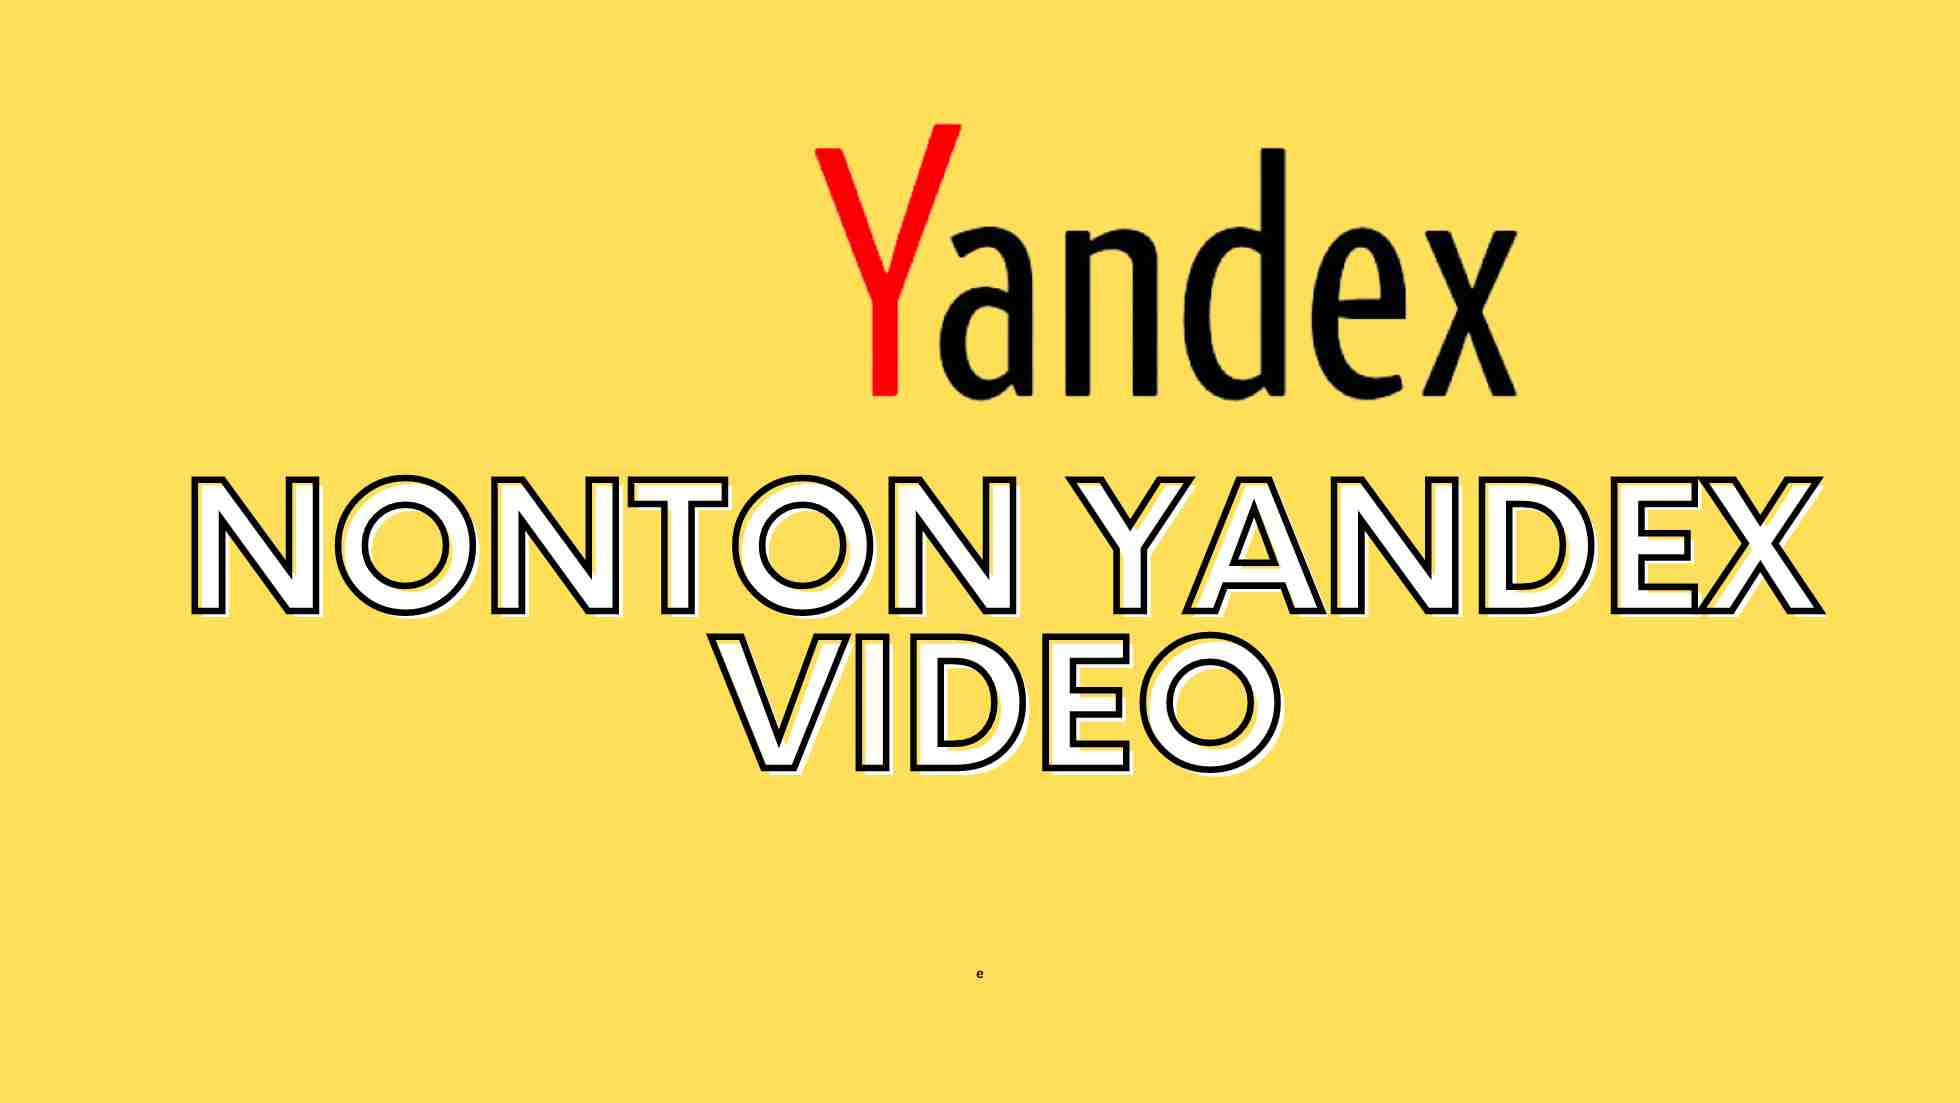 nonton yandex video